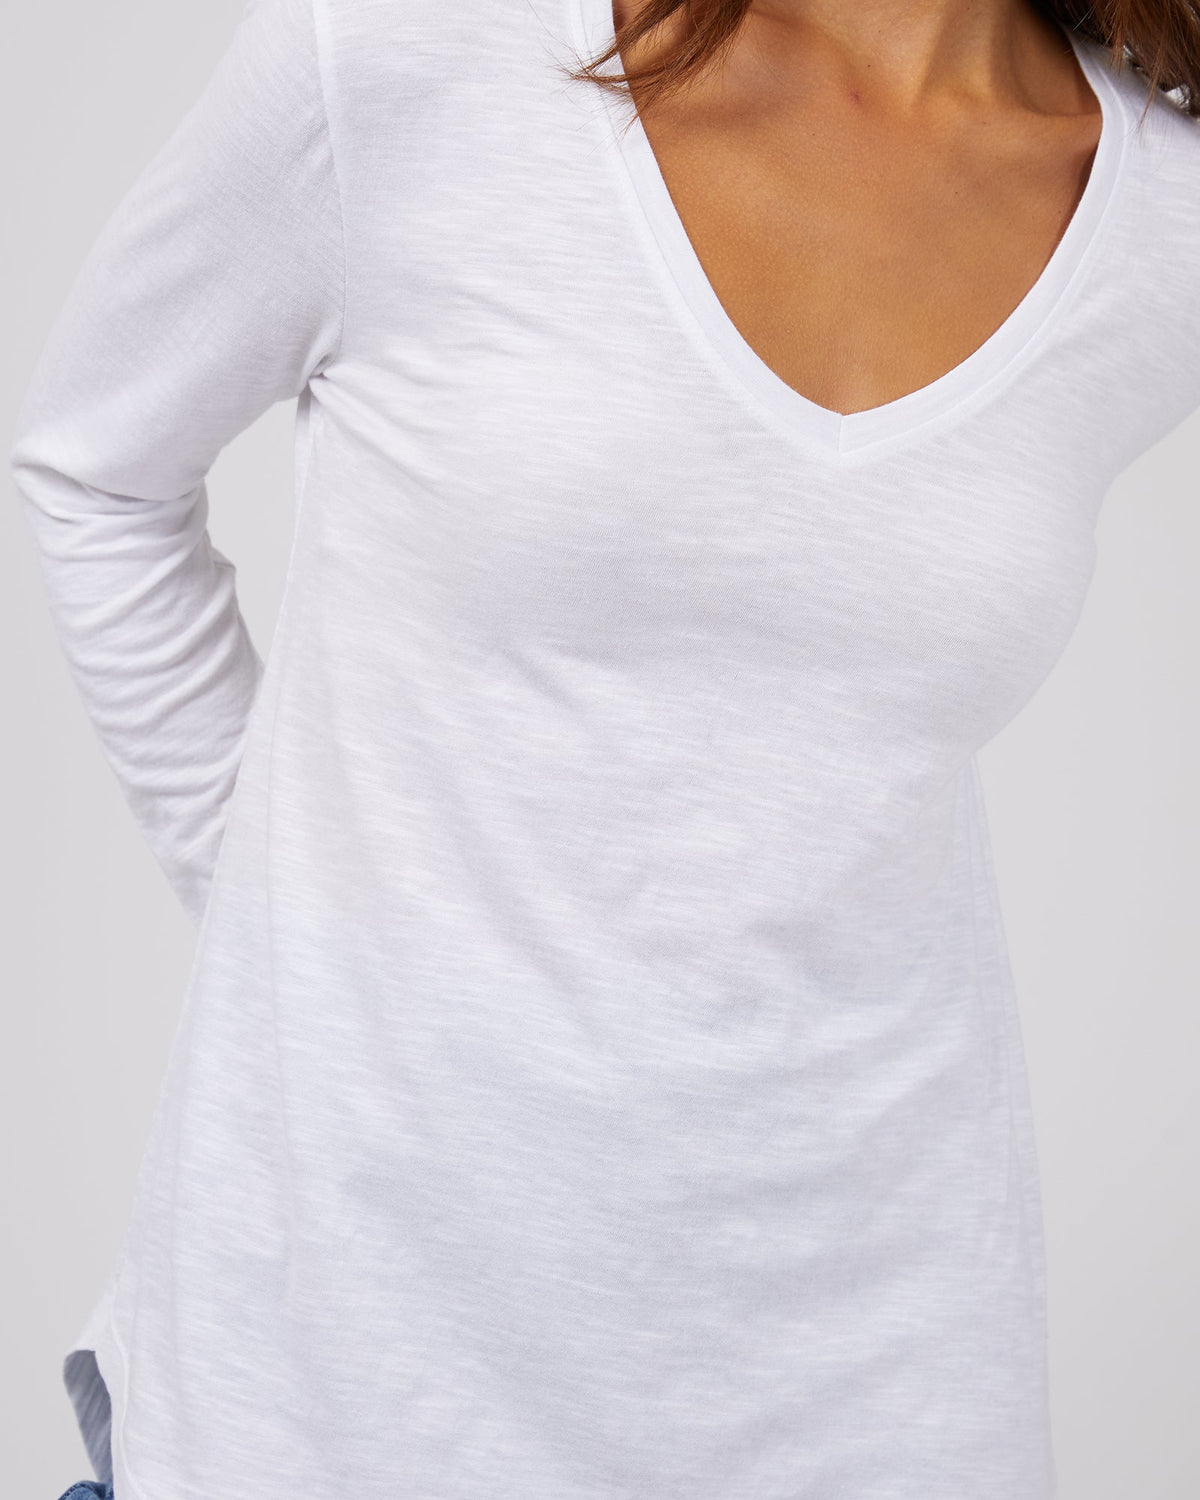 Silent Theory Ladies-Marvelous Long Sleeve White-Edge Clothing